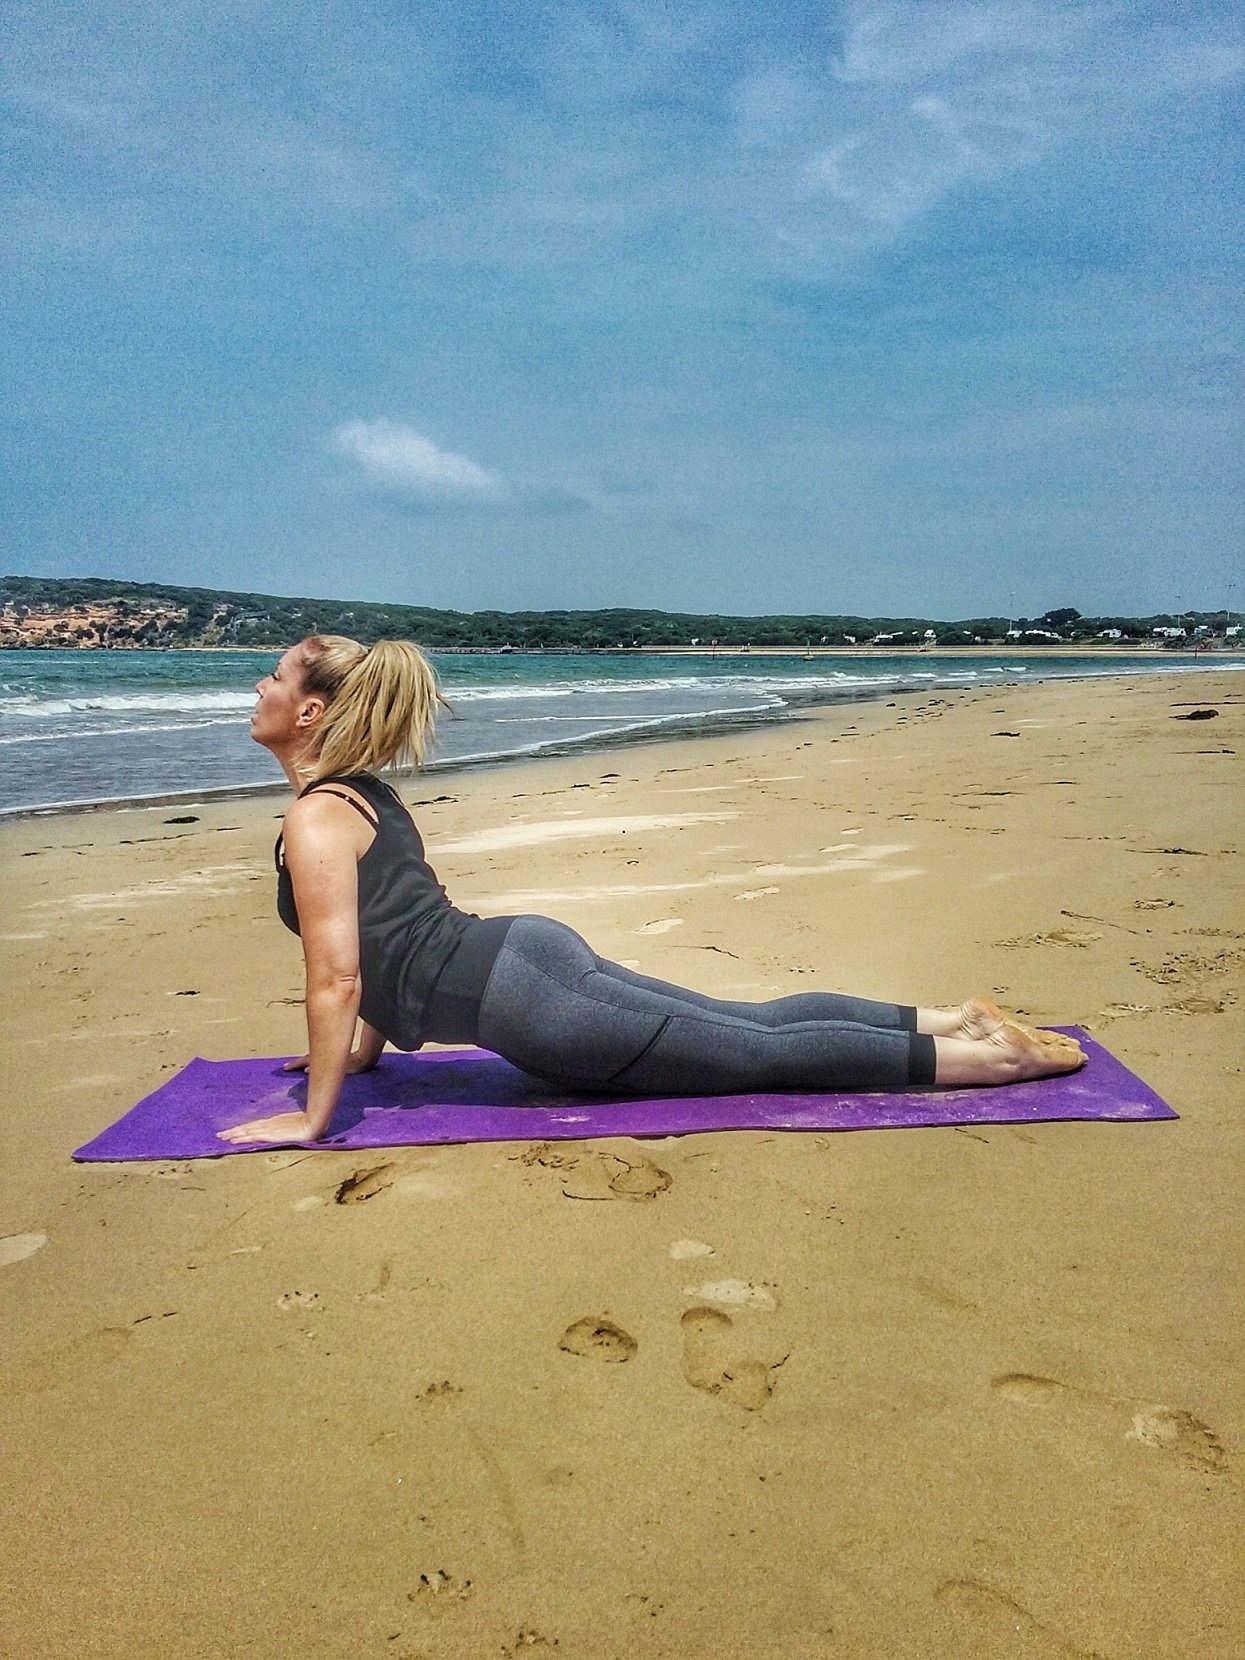 Yoga That Body & Mind | Style & Life by Susana